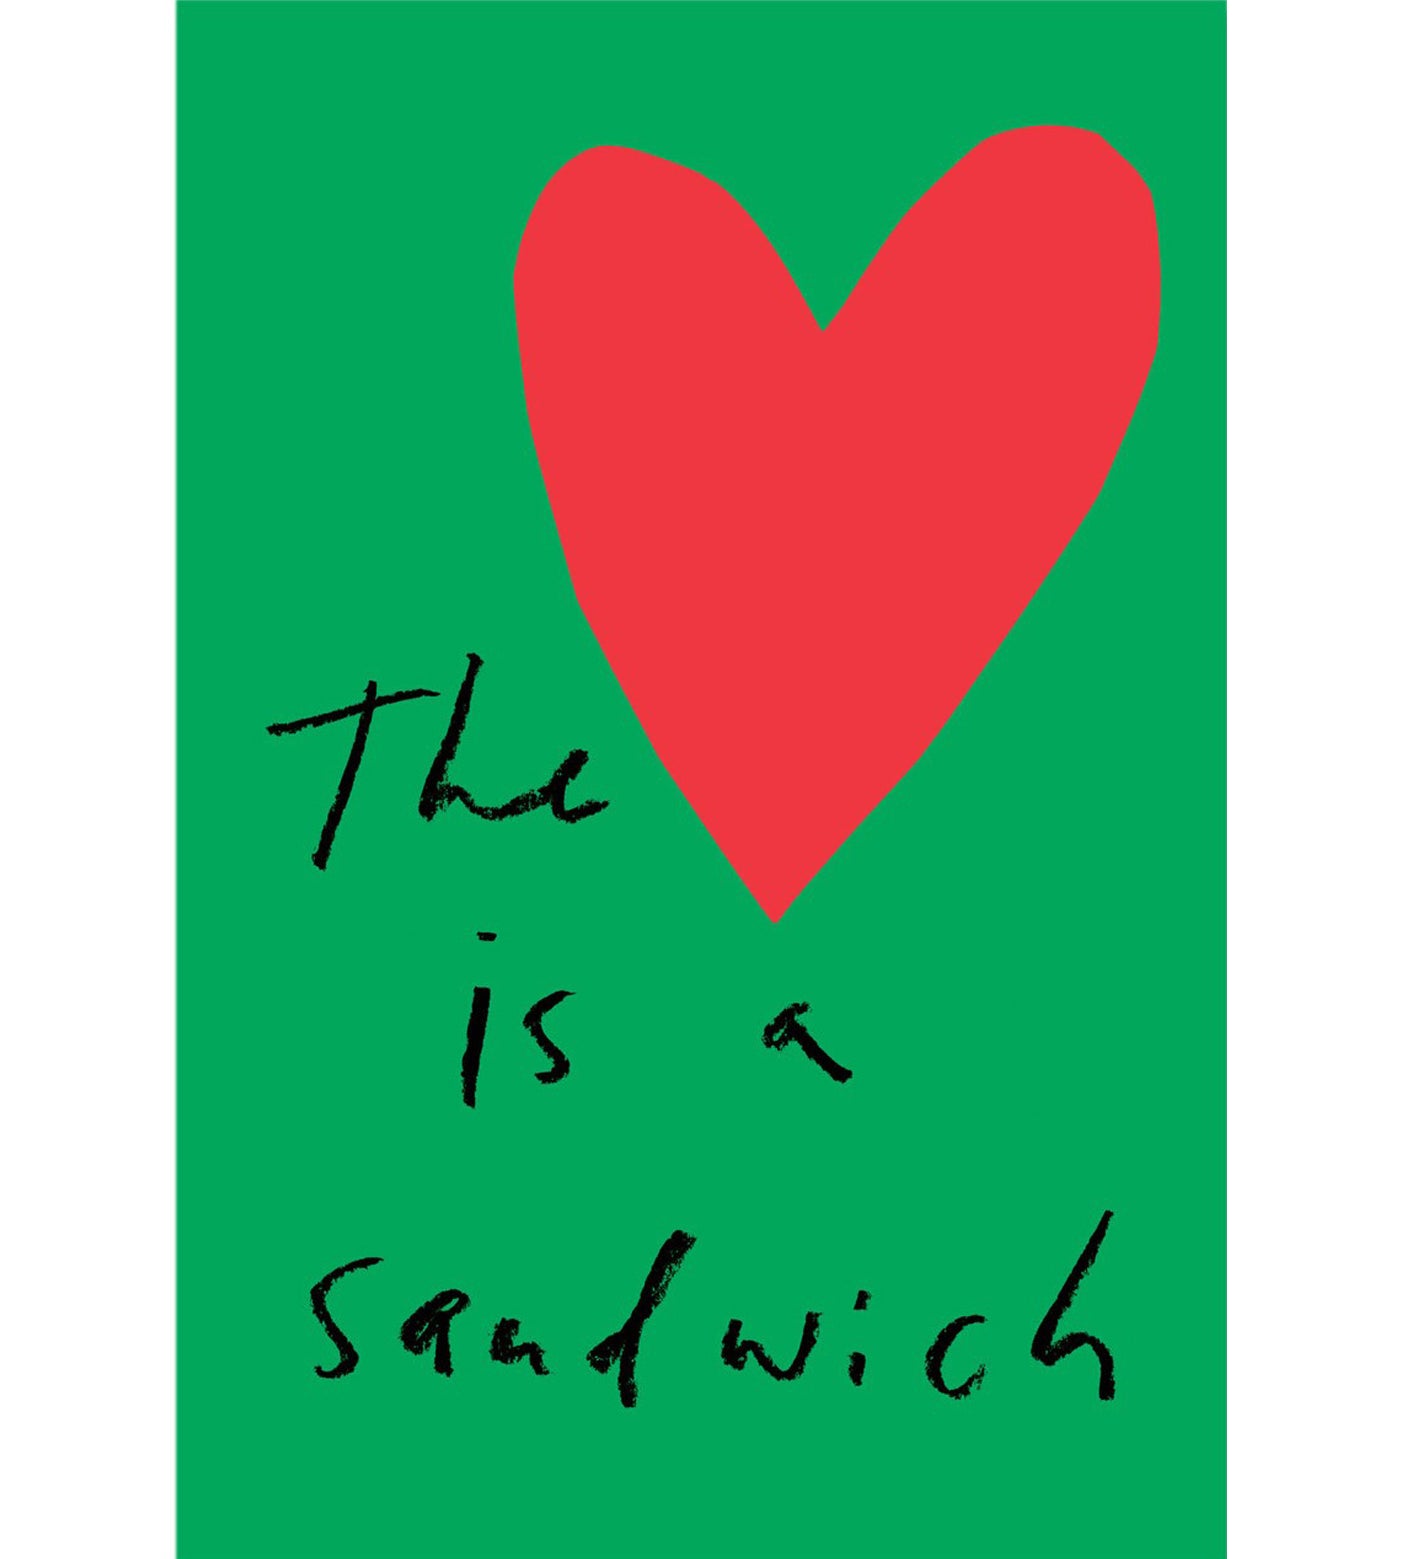 Jason Fulford: The Heart is a Sandwich